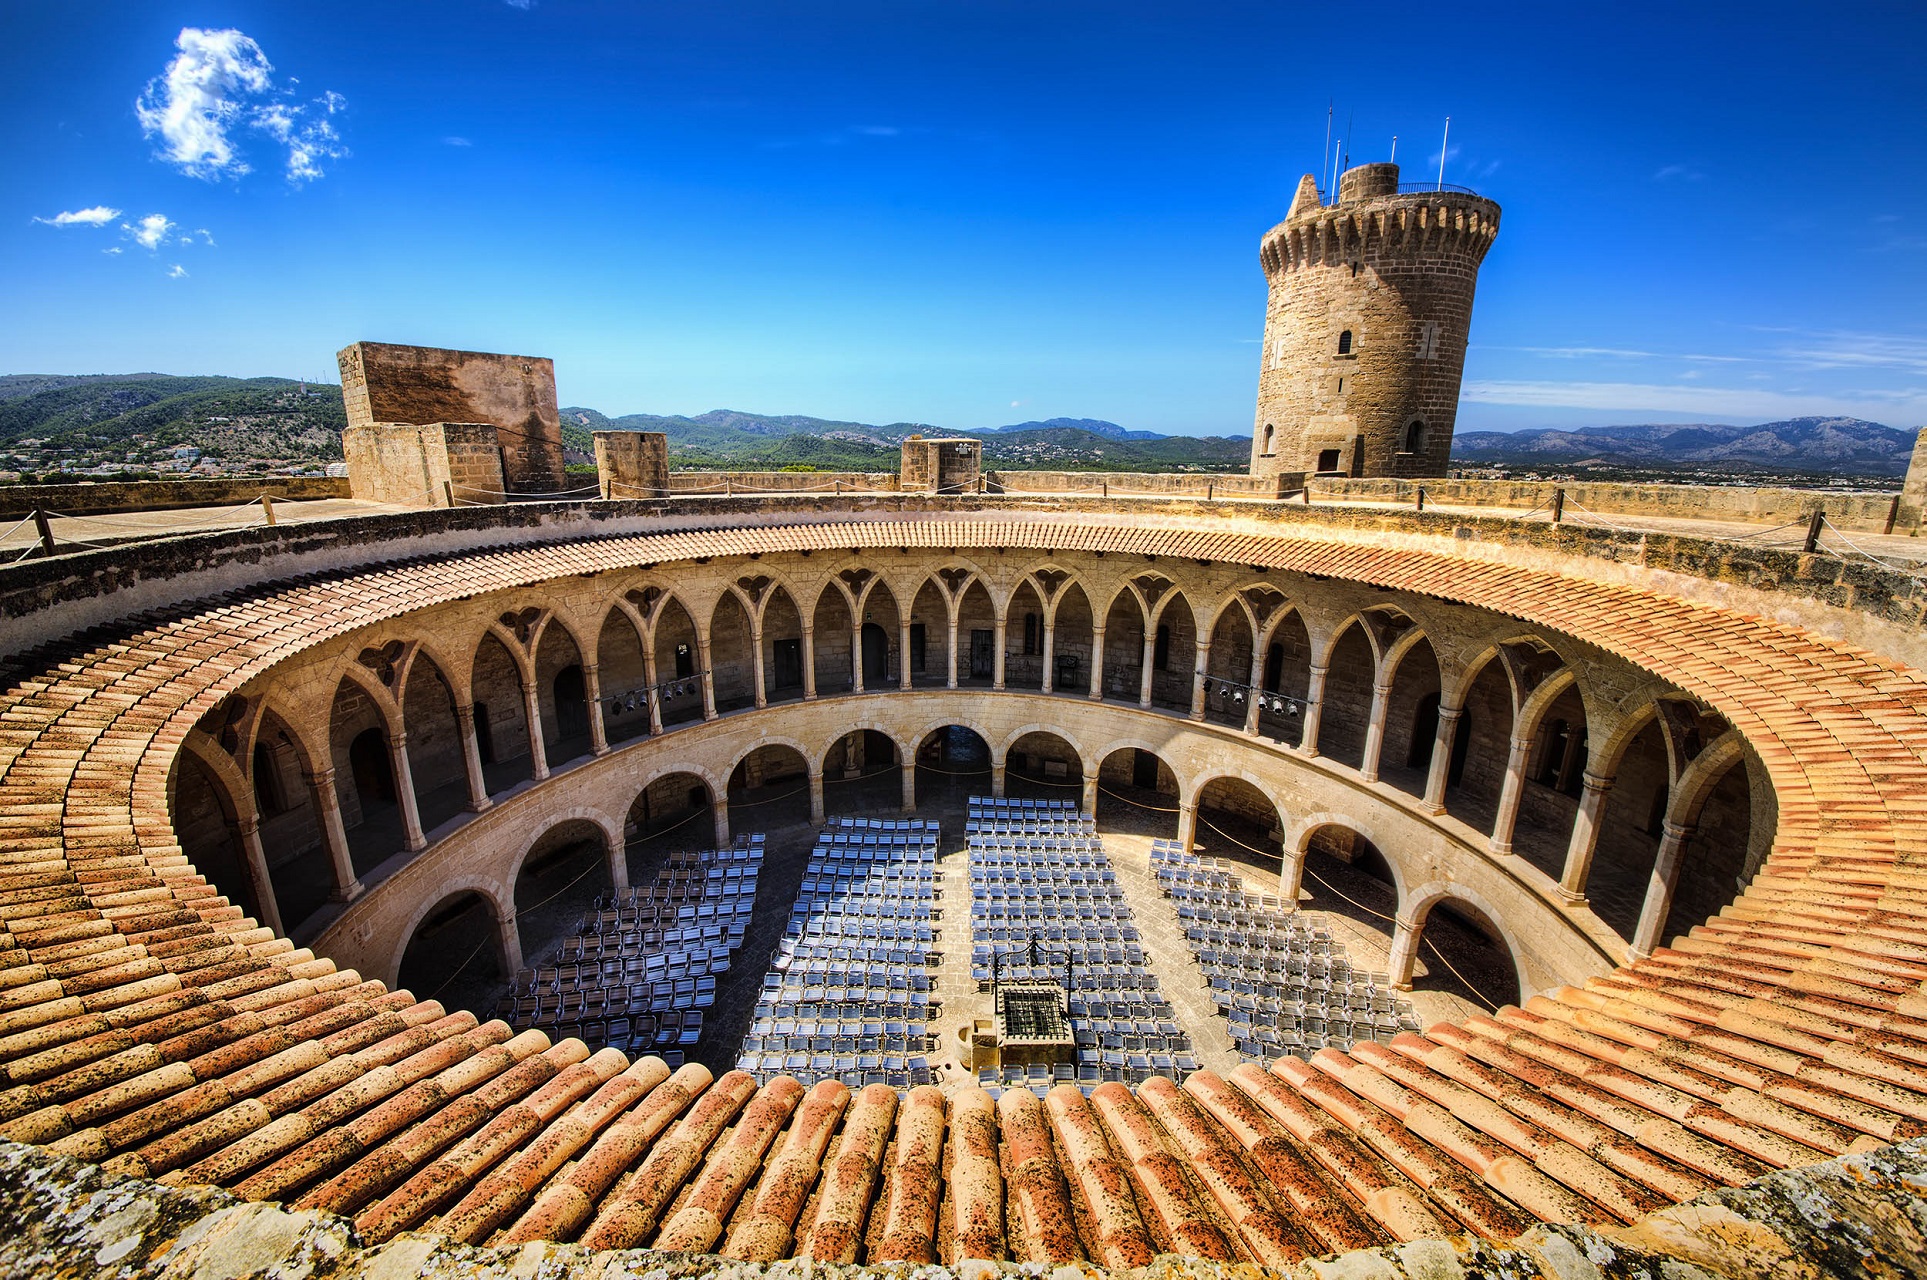 Die Festung Castell de Bellver in Palma de Mallorca.